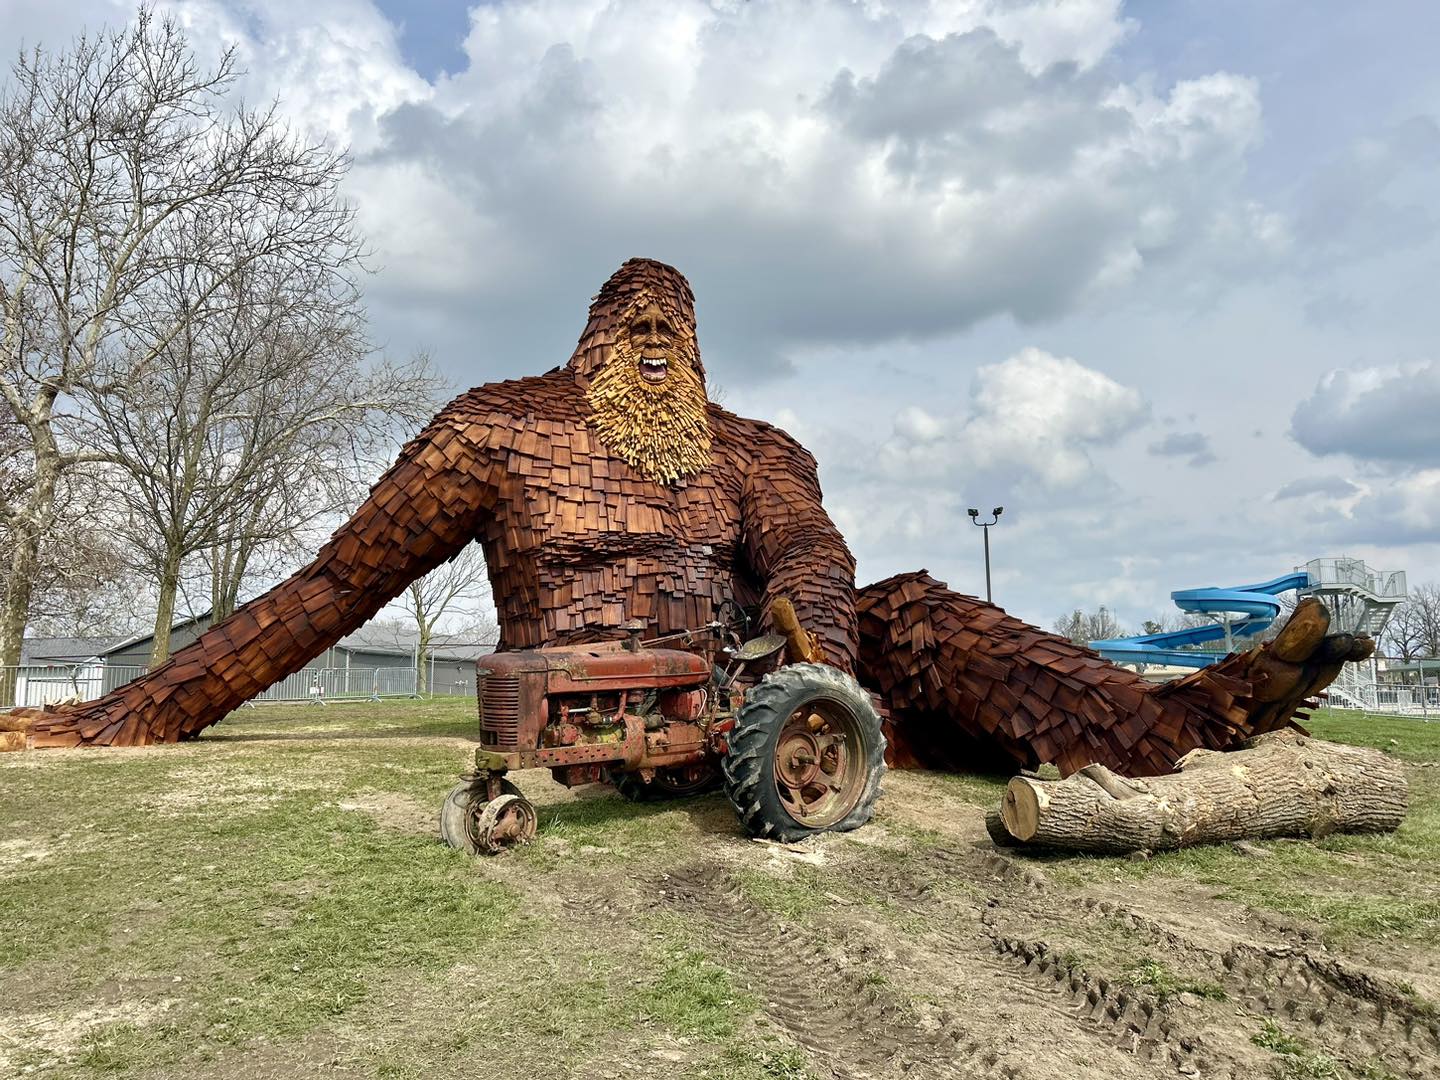 Enormous Bigfoot Sculpture Built in Ohio